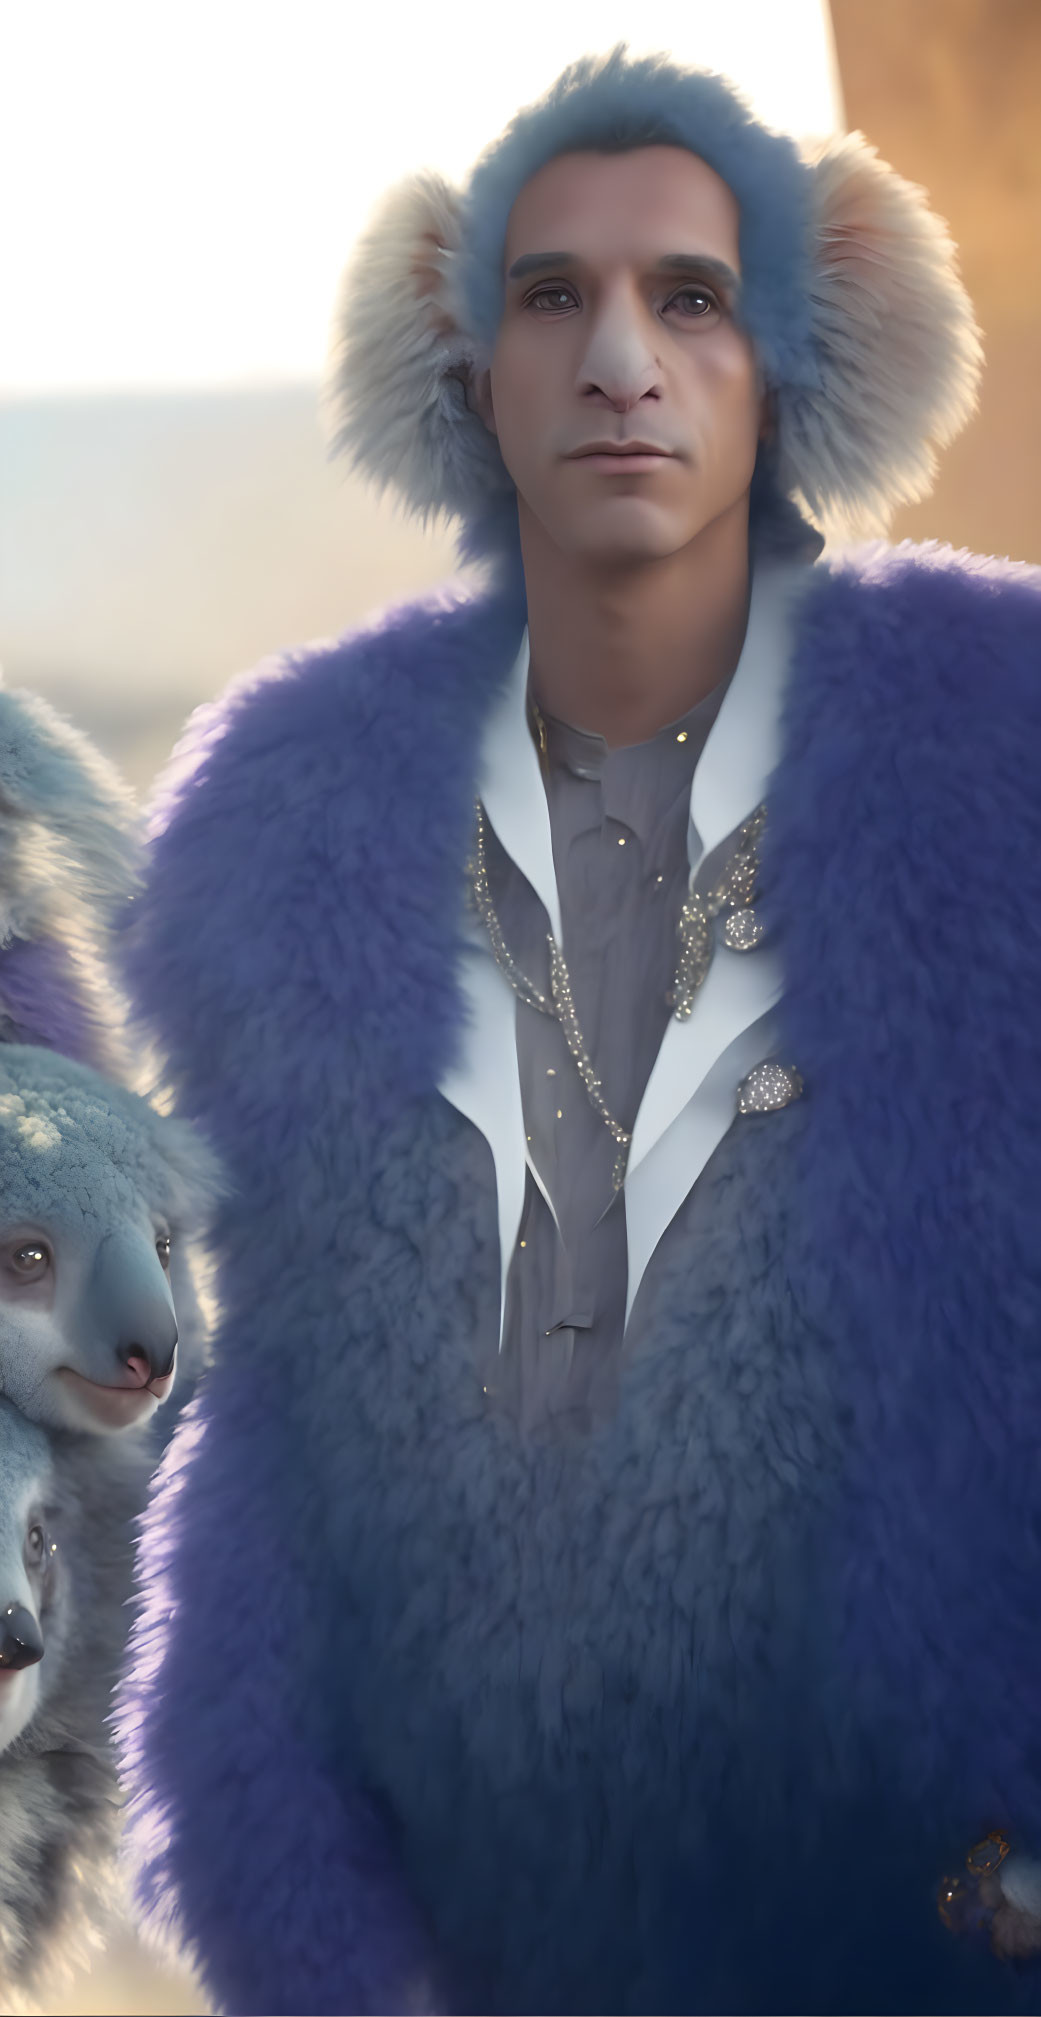 Elfin person in purple fur-trimmed coat with koalas